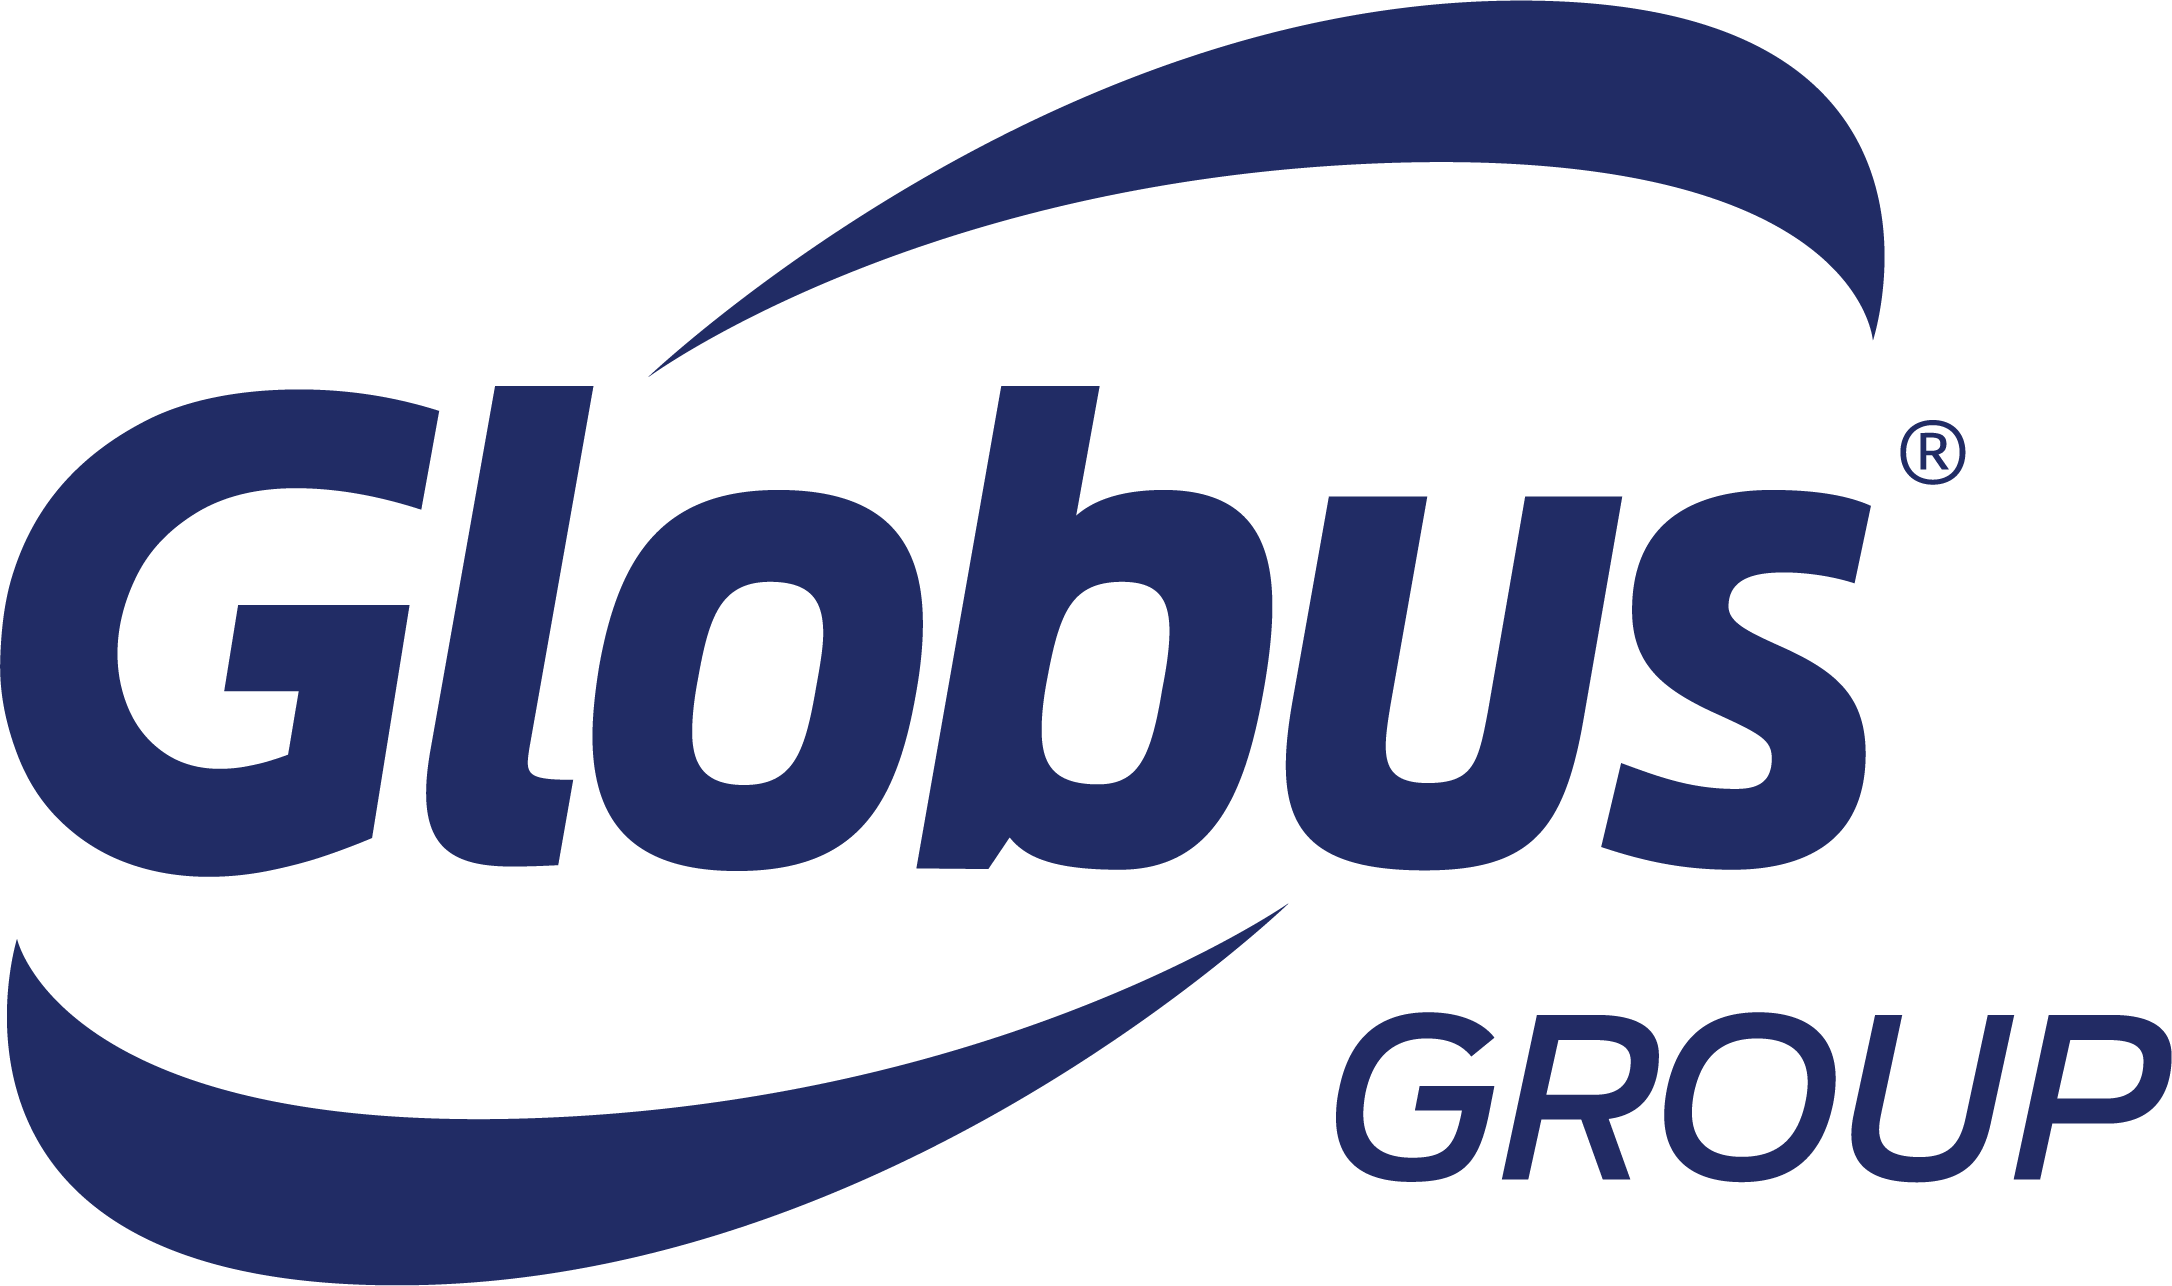 Fleet Factors - Globus Group - PPE, Workwear & Embroidery